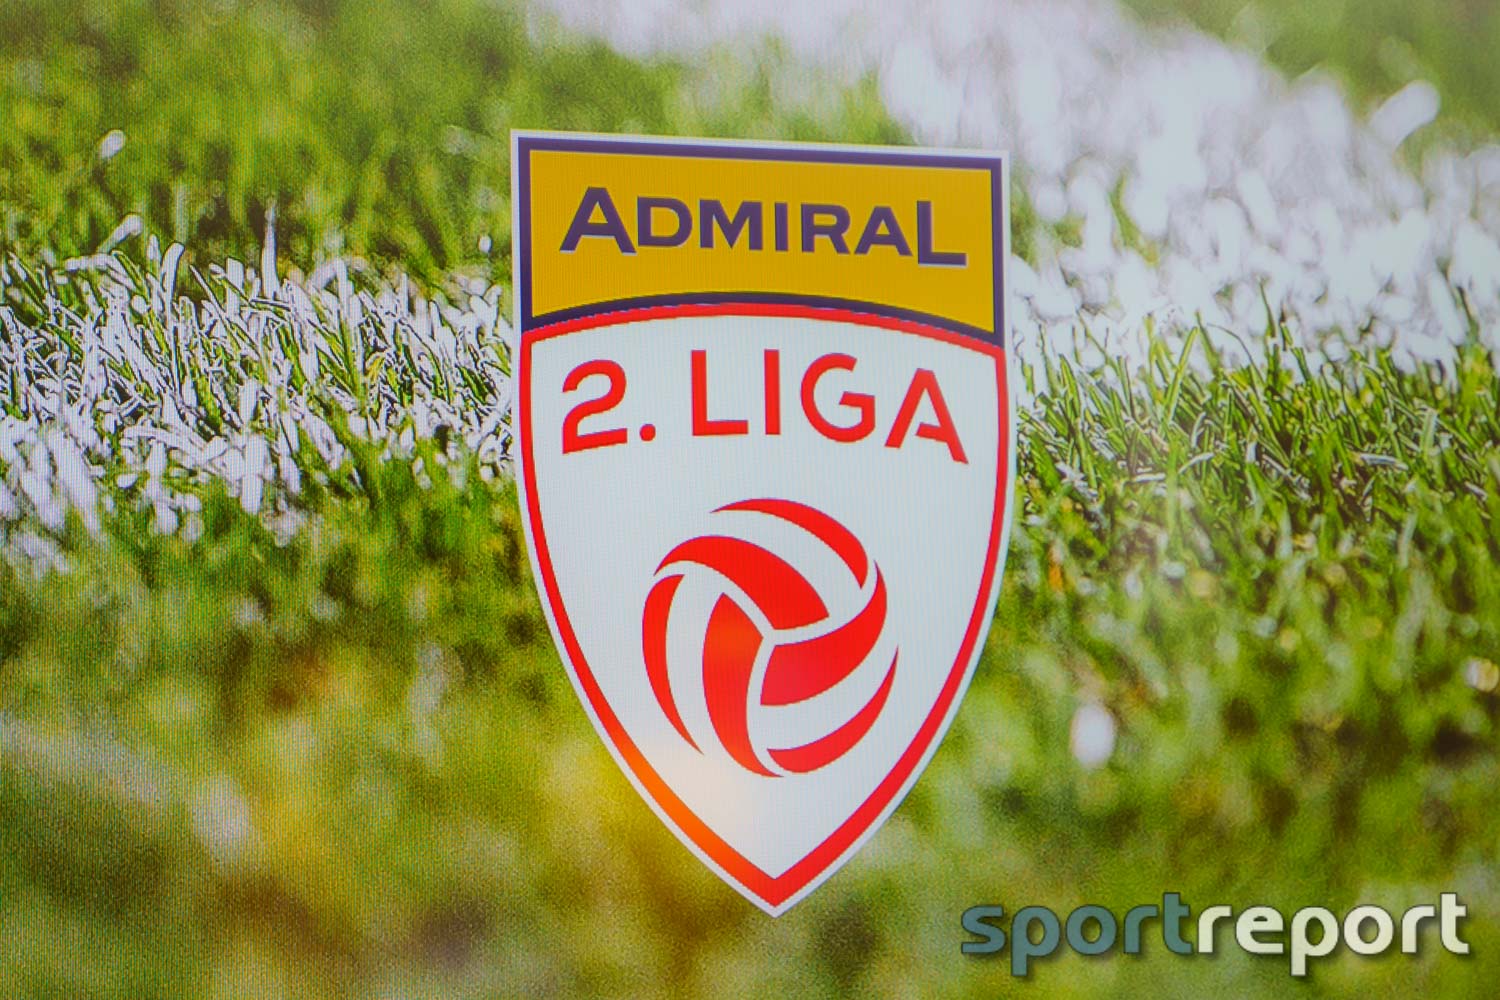 Sportreport Tabellenservice - ADMIRAL 2. Liga